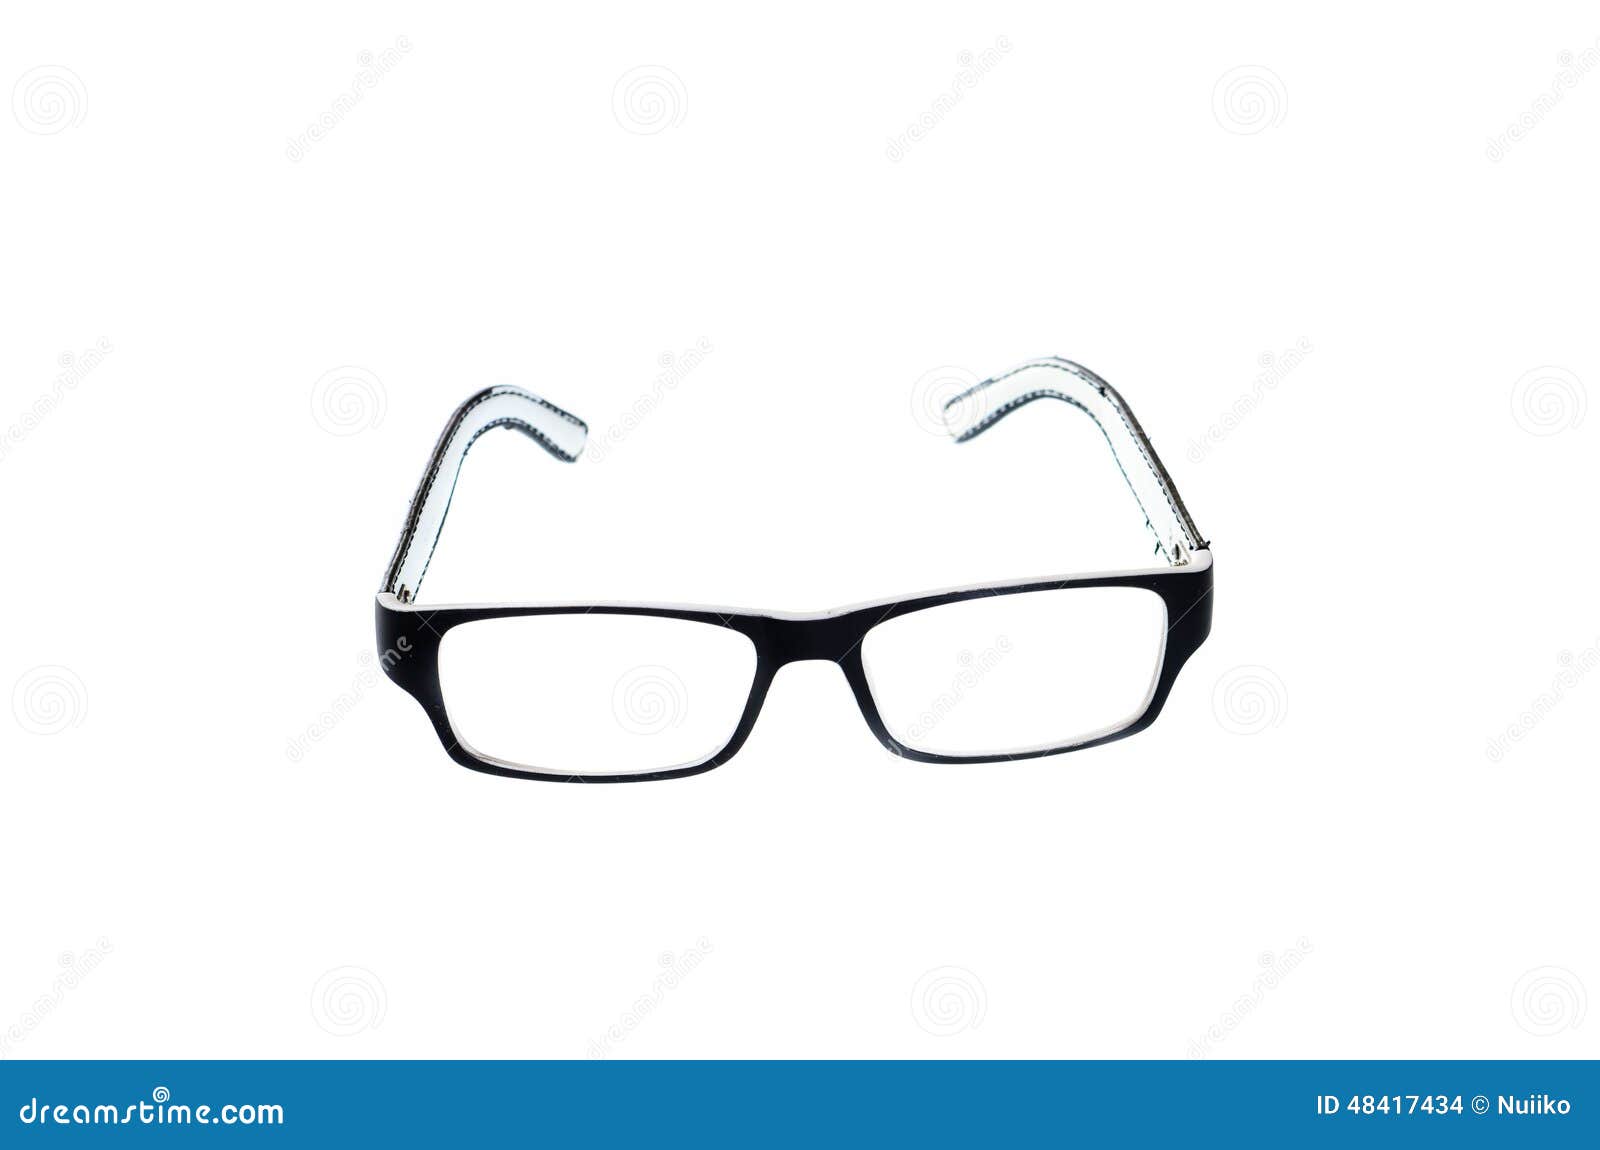 Black and White Eye Glasses Isolated on White Stock Photo - Image of ...